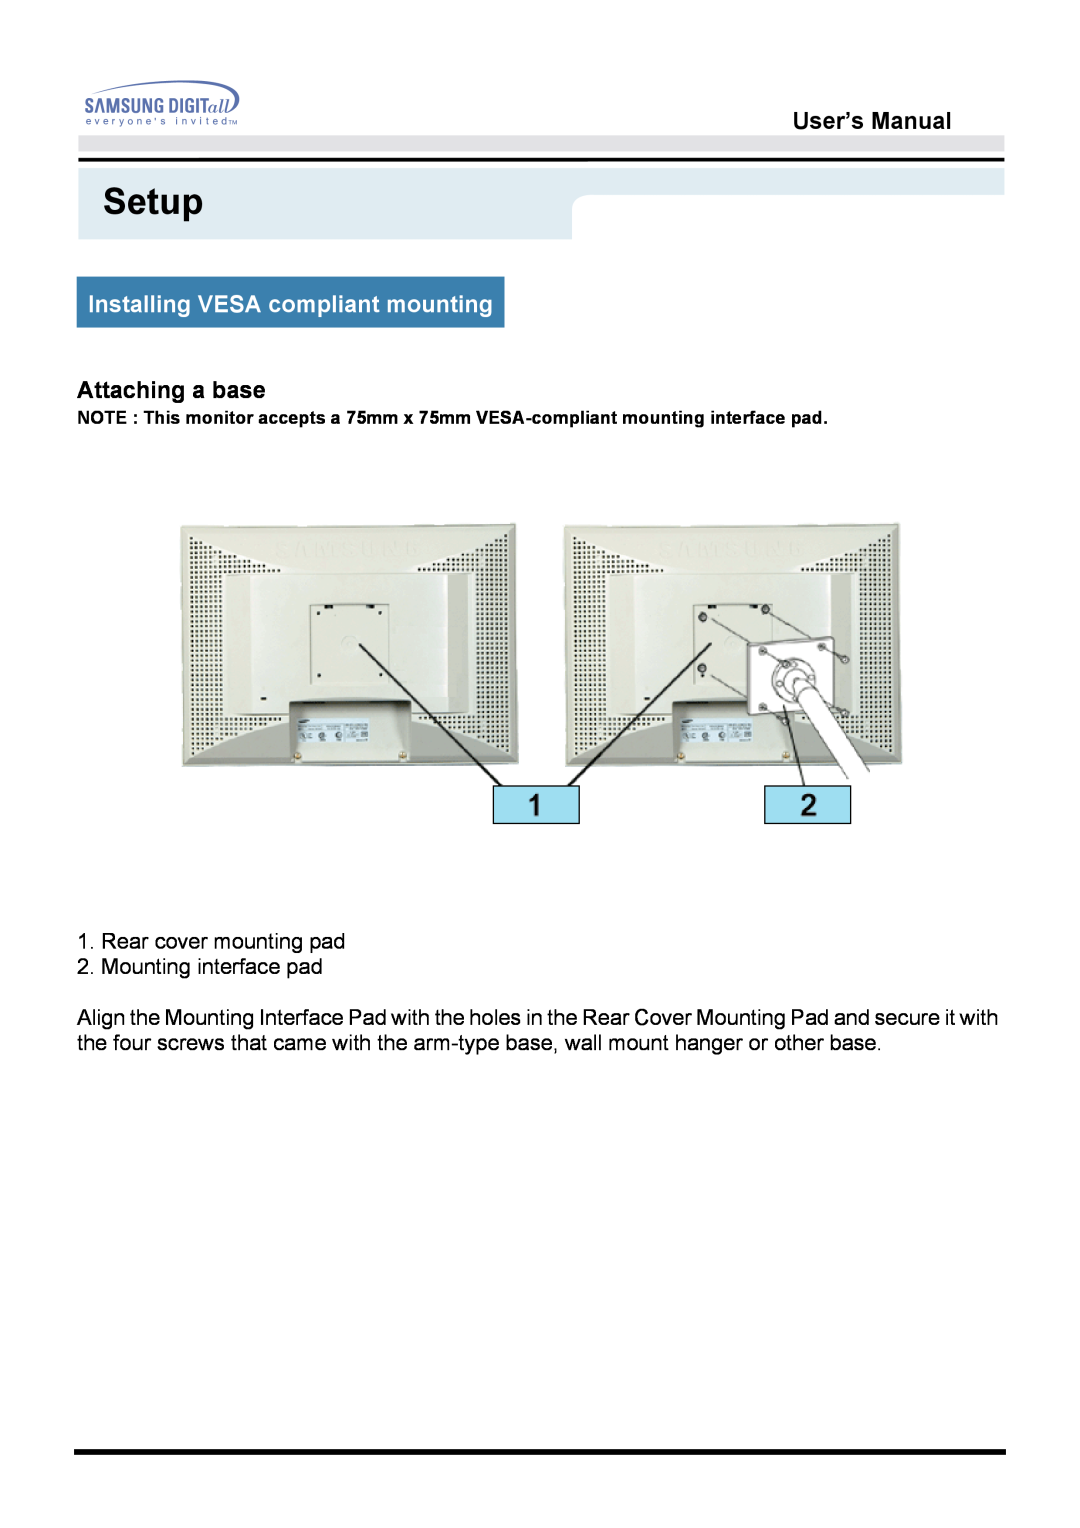 Samsung 151D user manual Attaching a base, Setup, User’s Manual, Installing VESA compliant mounting 